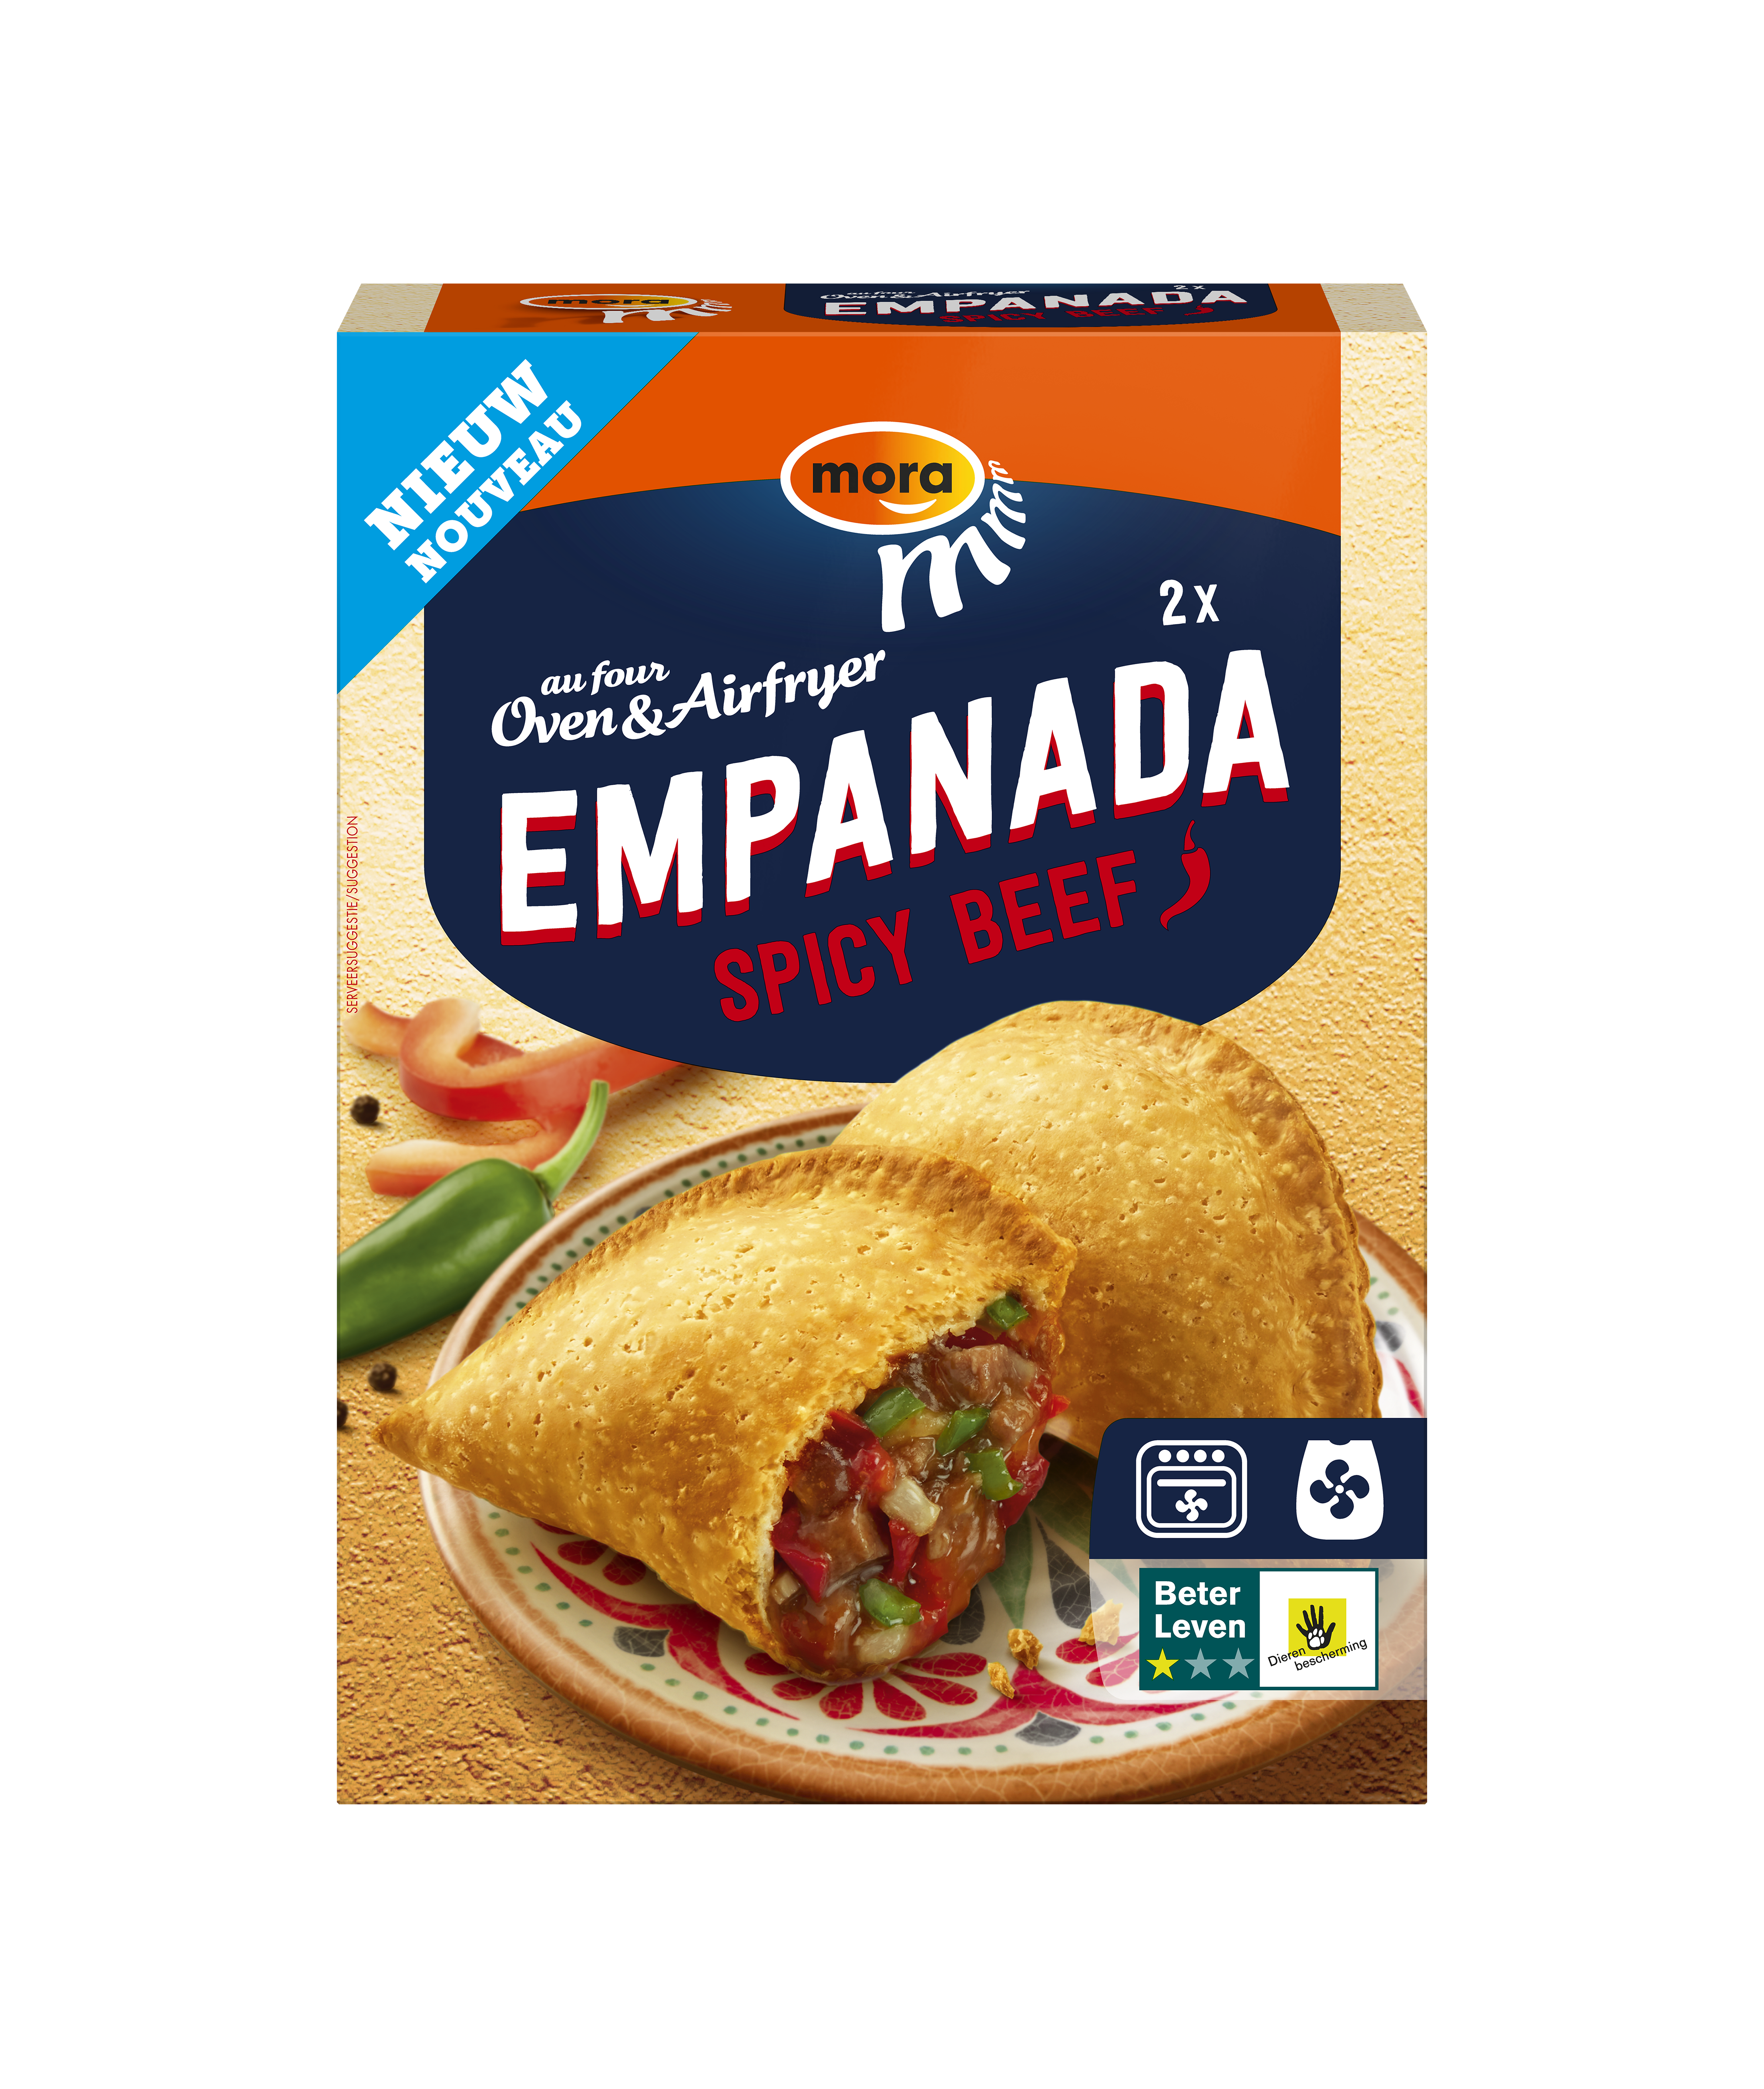 Empanada Spicy Beef